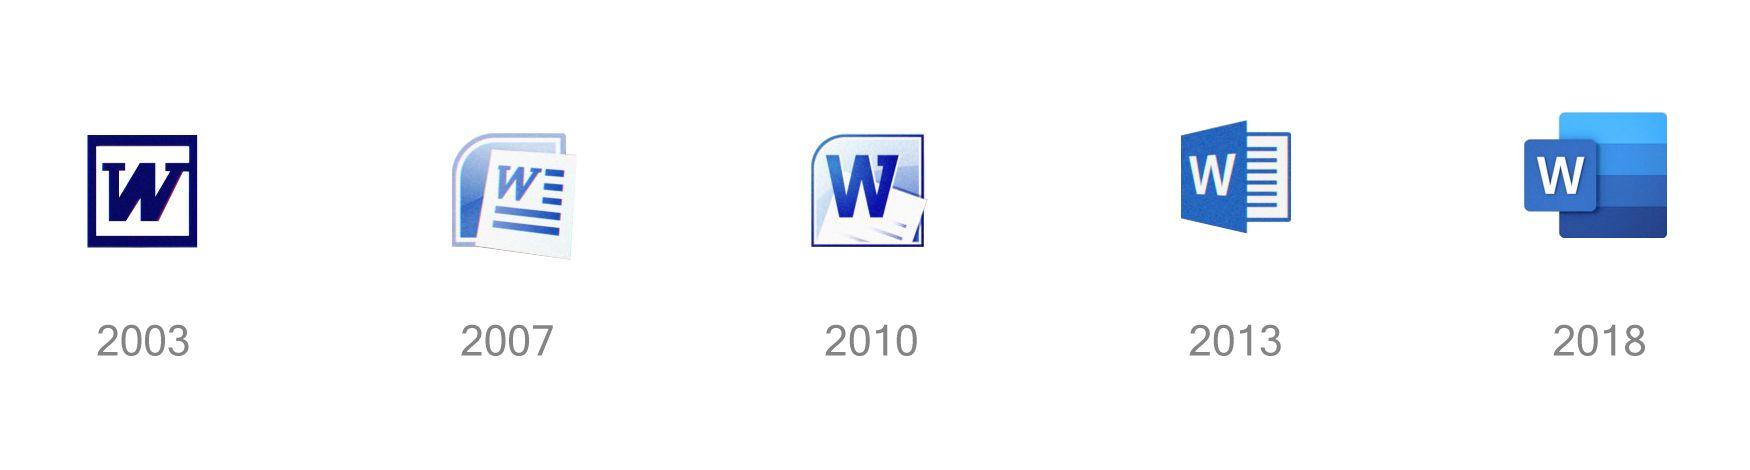 2018 Microsoft Word Logo - Microsoft Redesigns Office Logos To 